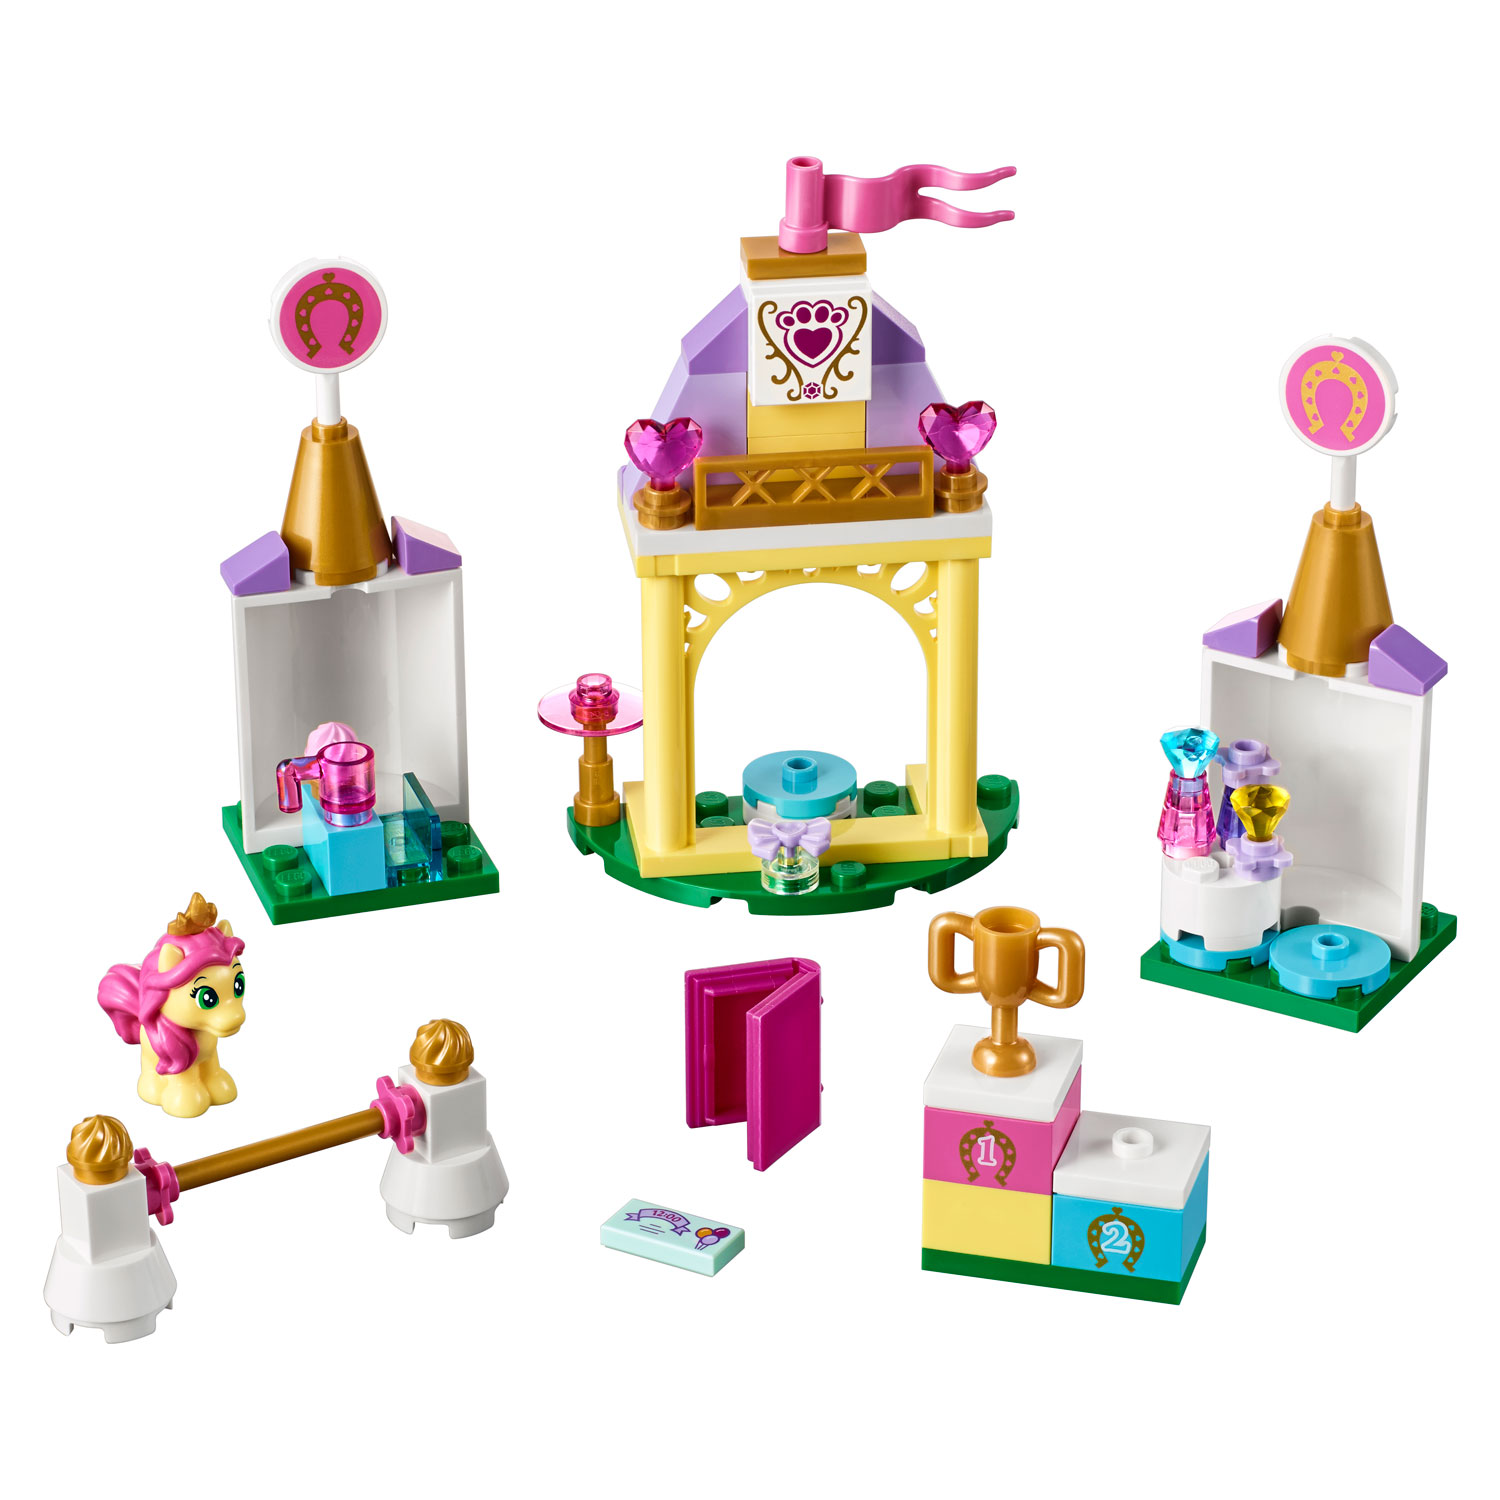 LEGO Disney Prinses 41144 Petite's Koninklijke Stal